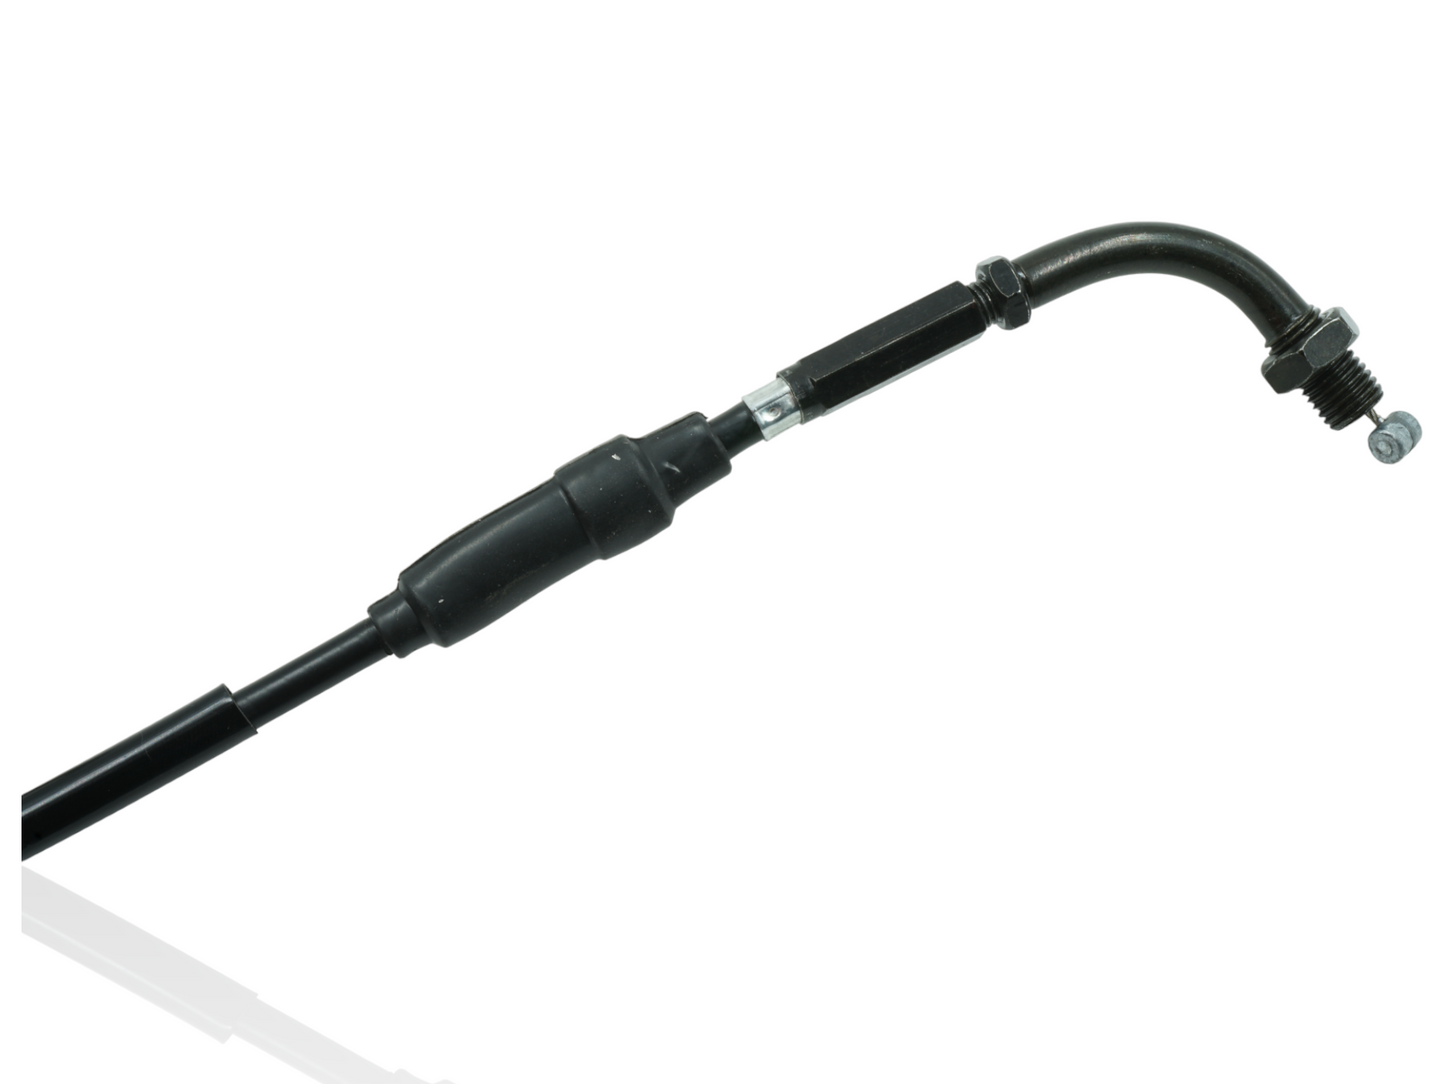 17910- Replacement Throttle Cable for Honda Rebel CMX250C 1996-2015 17910-KEN-670